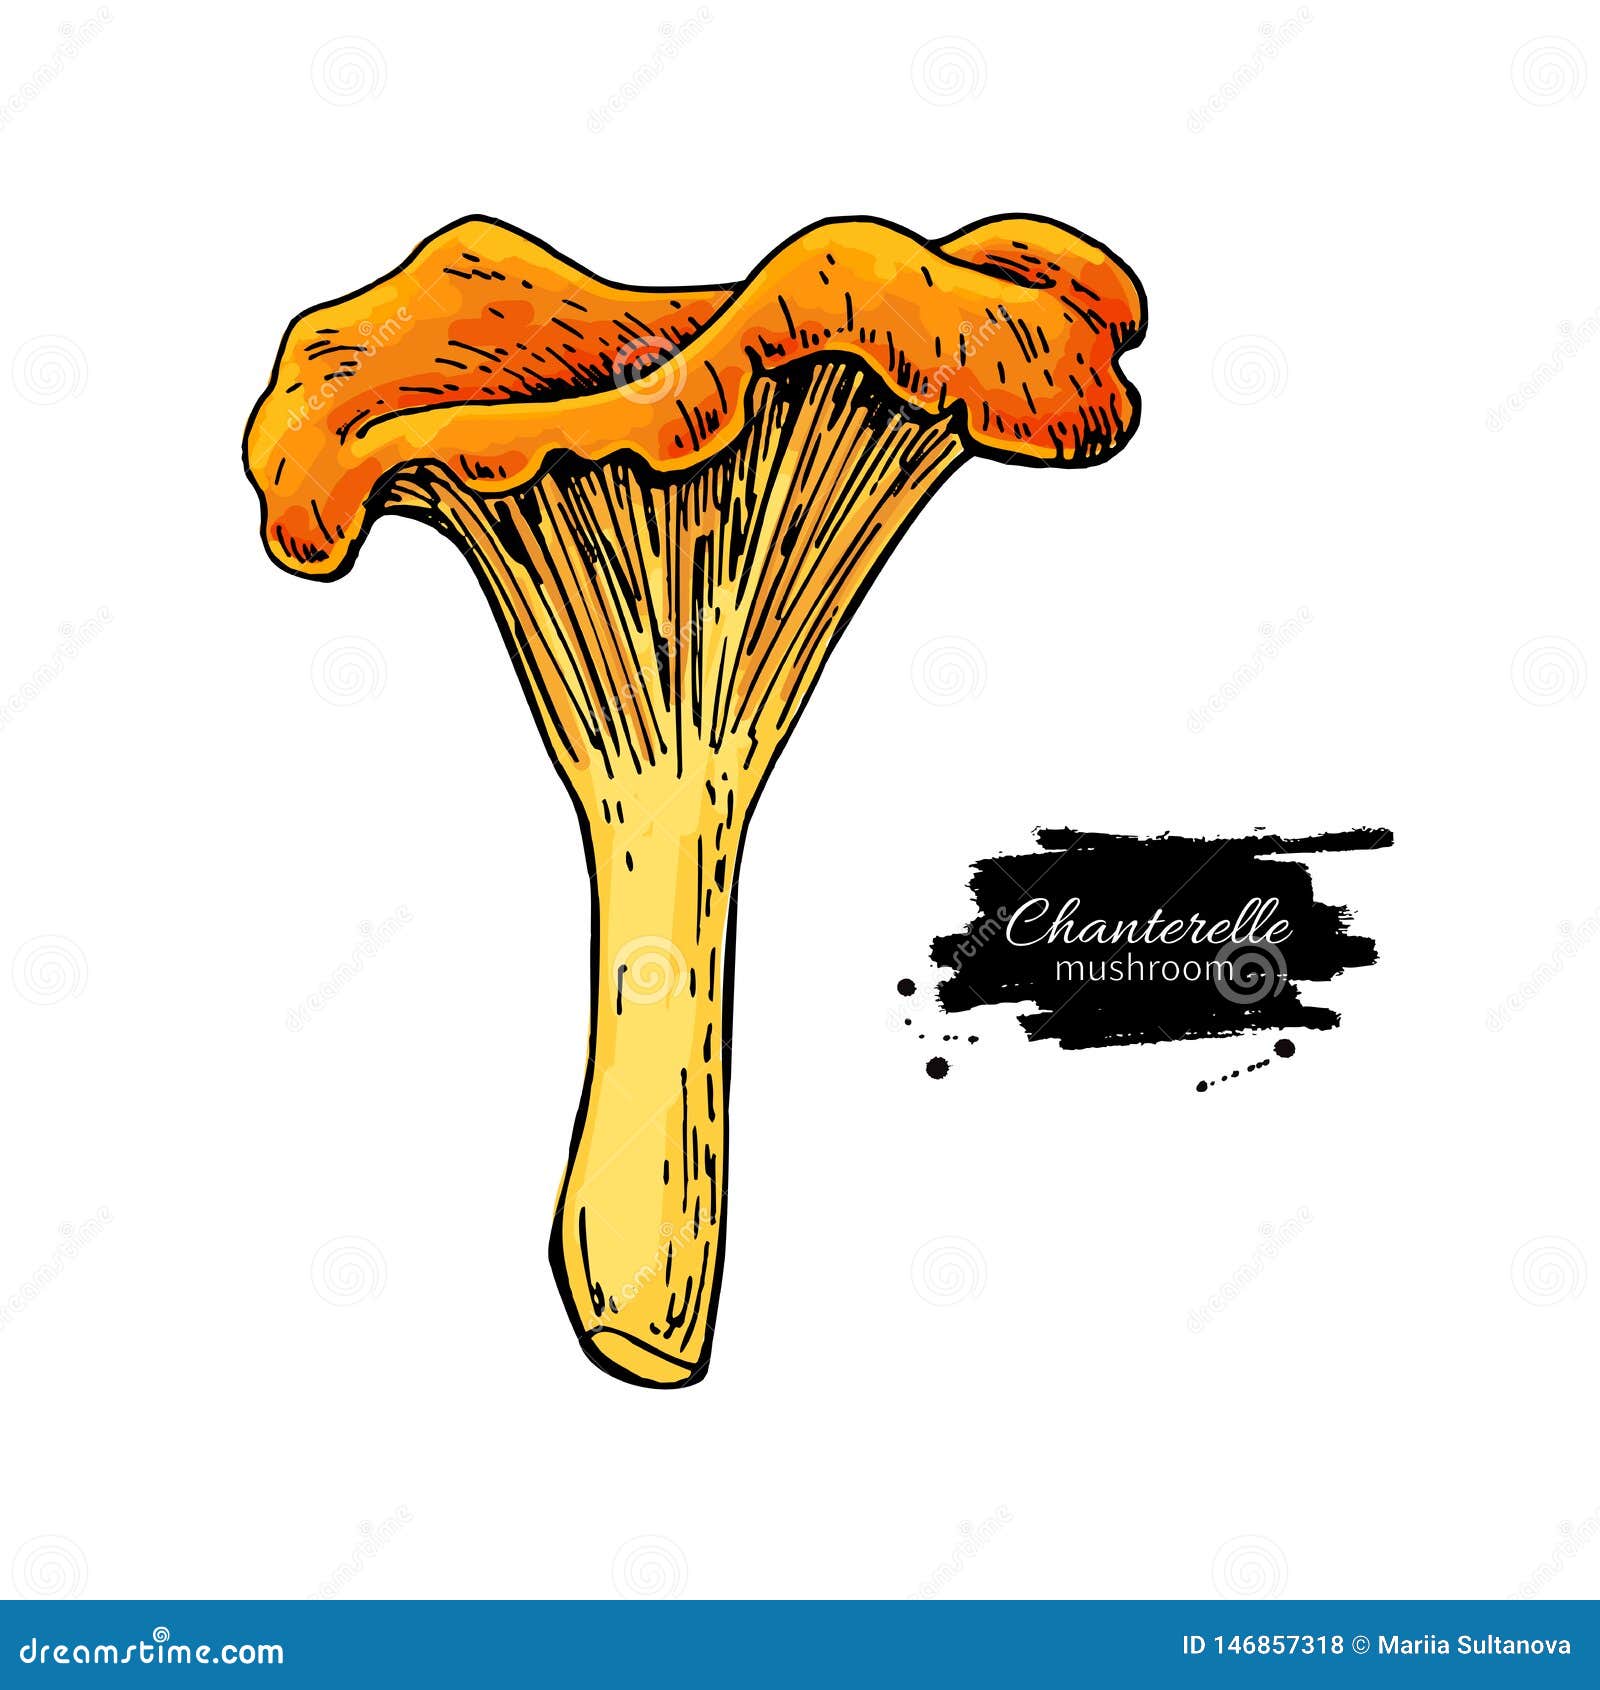 Chanterelle Mushroom Hand Drawn Vector Illustration. Sketch Food ...